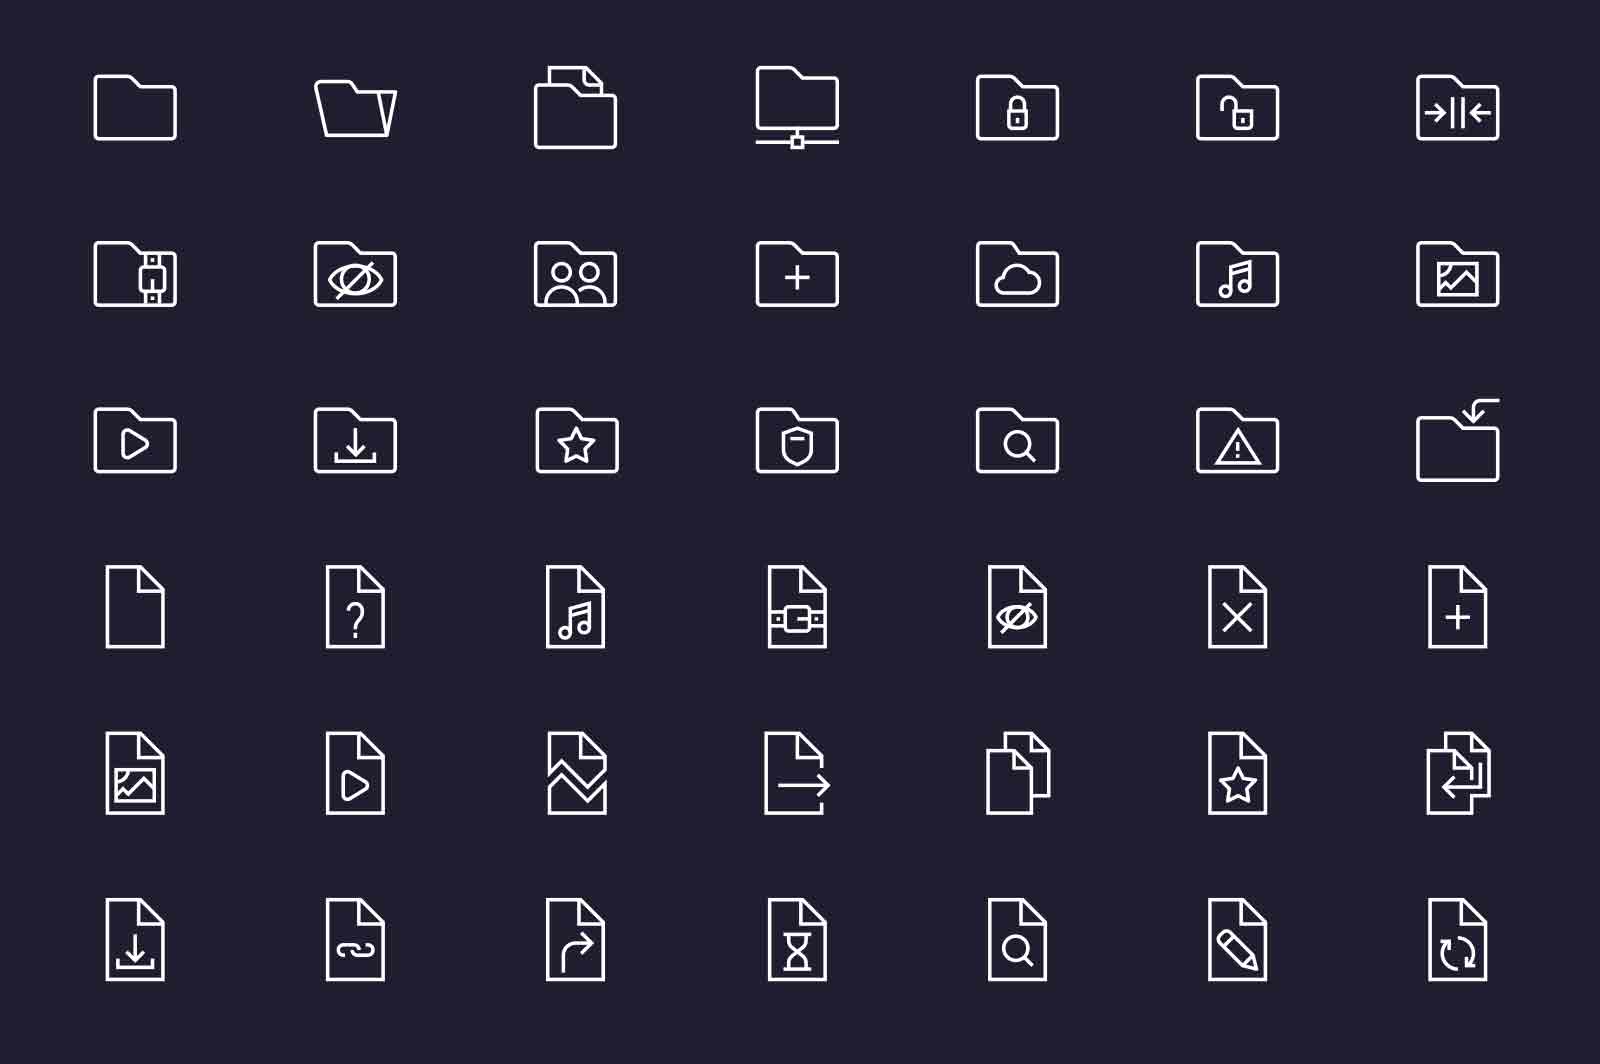 File organization and document archive icon set vector illustration. Folder synchronization line icon. Dark background